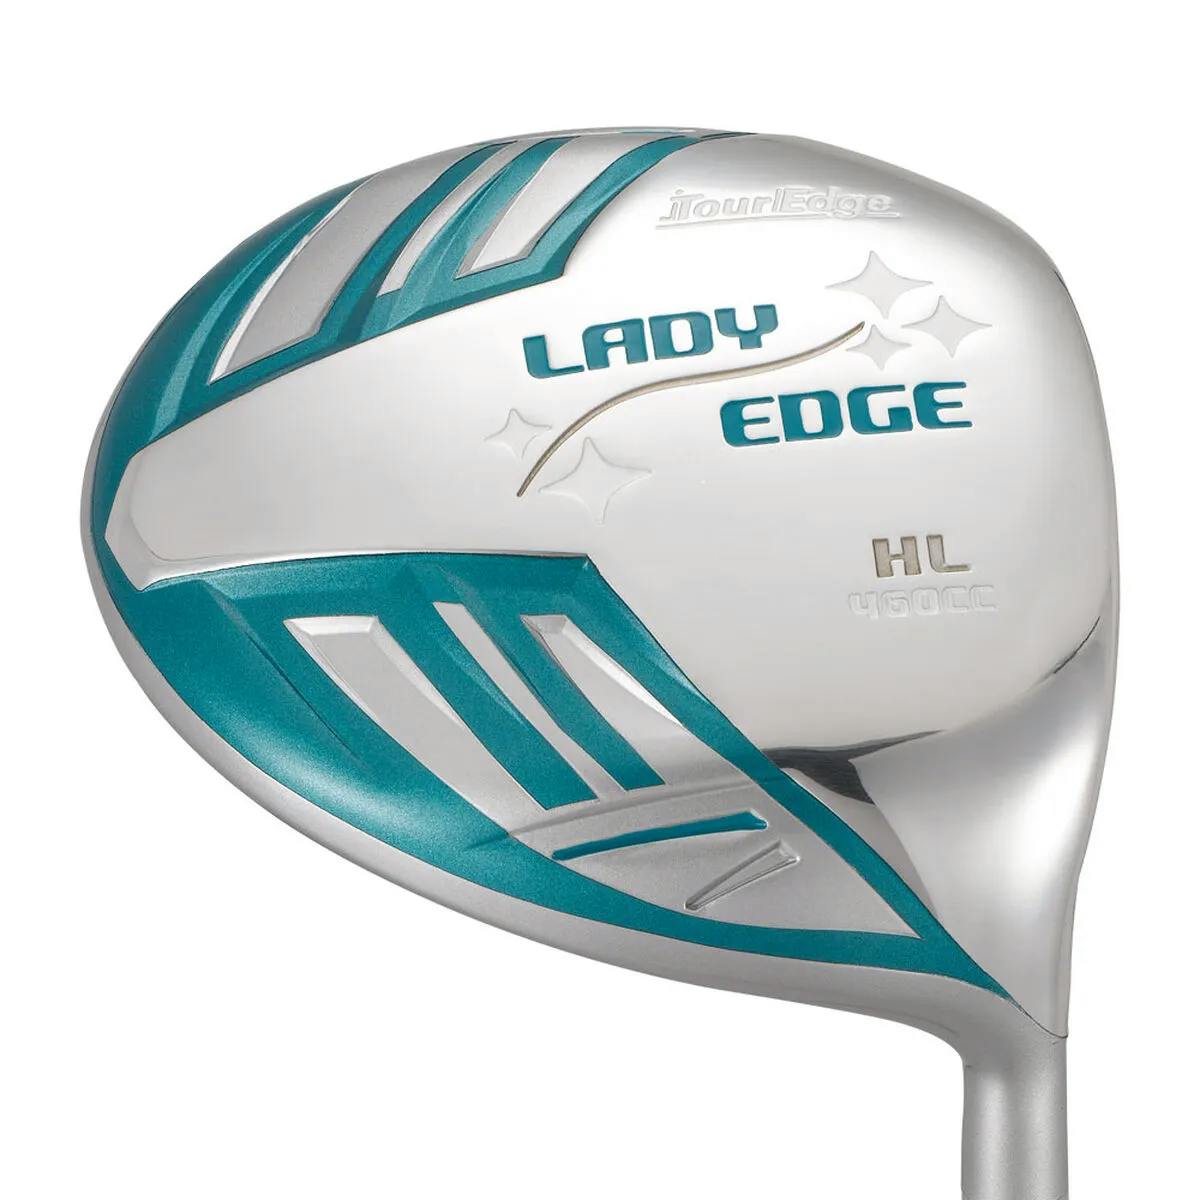 Tour Edge Lady Edge Women's Full Set · Left handed · Graphite · Ladies · +1 Inch · Turquoise/White